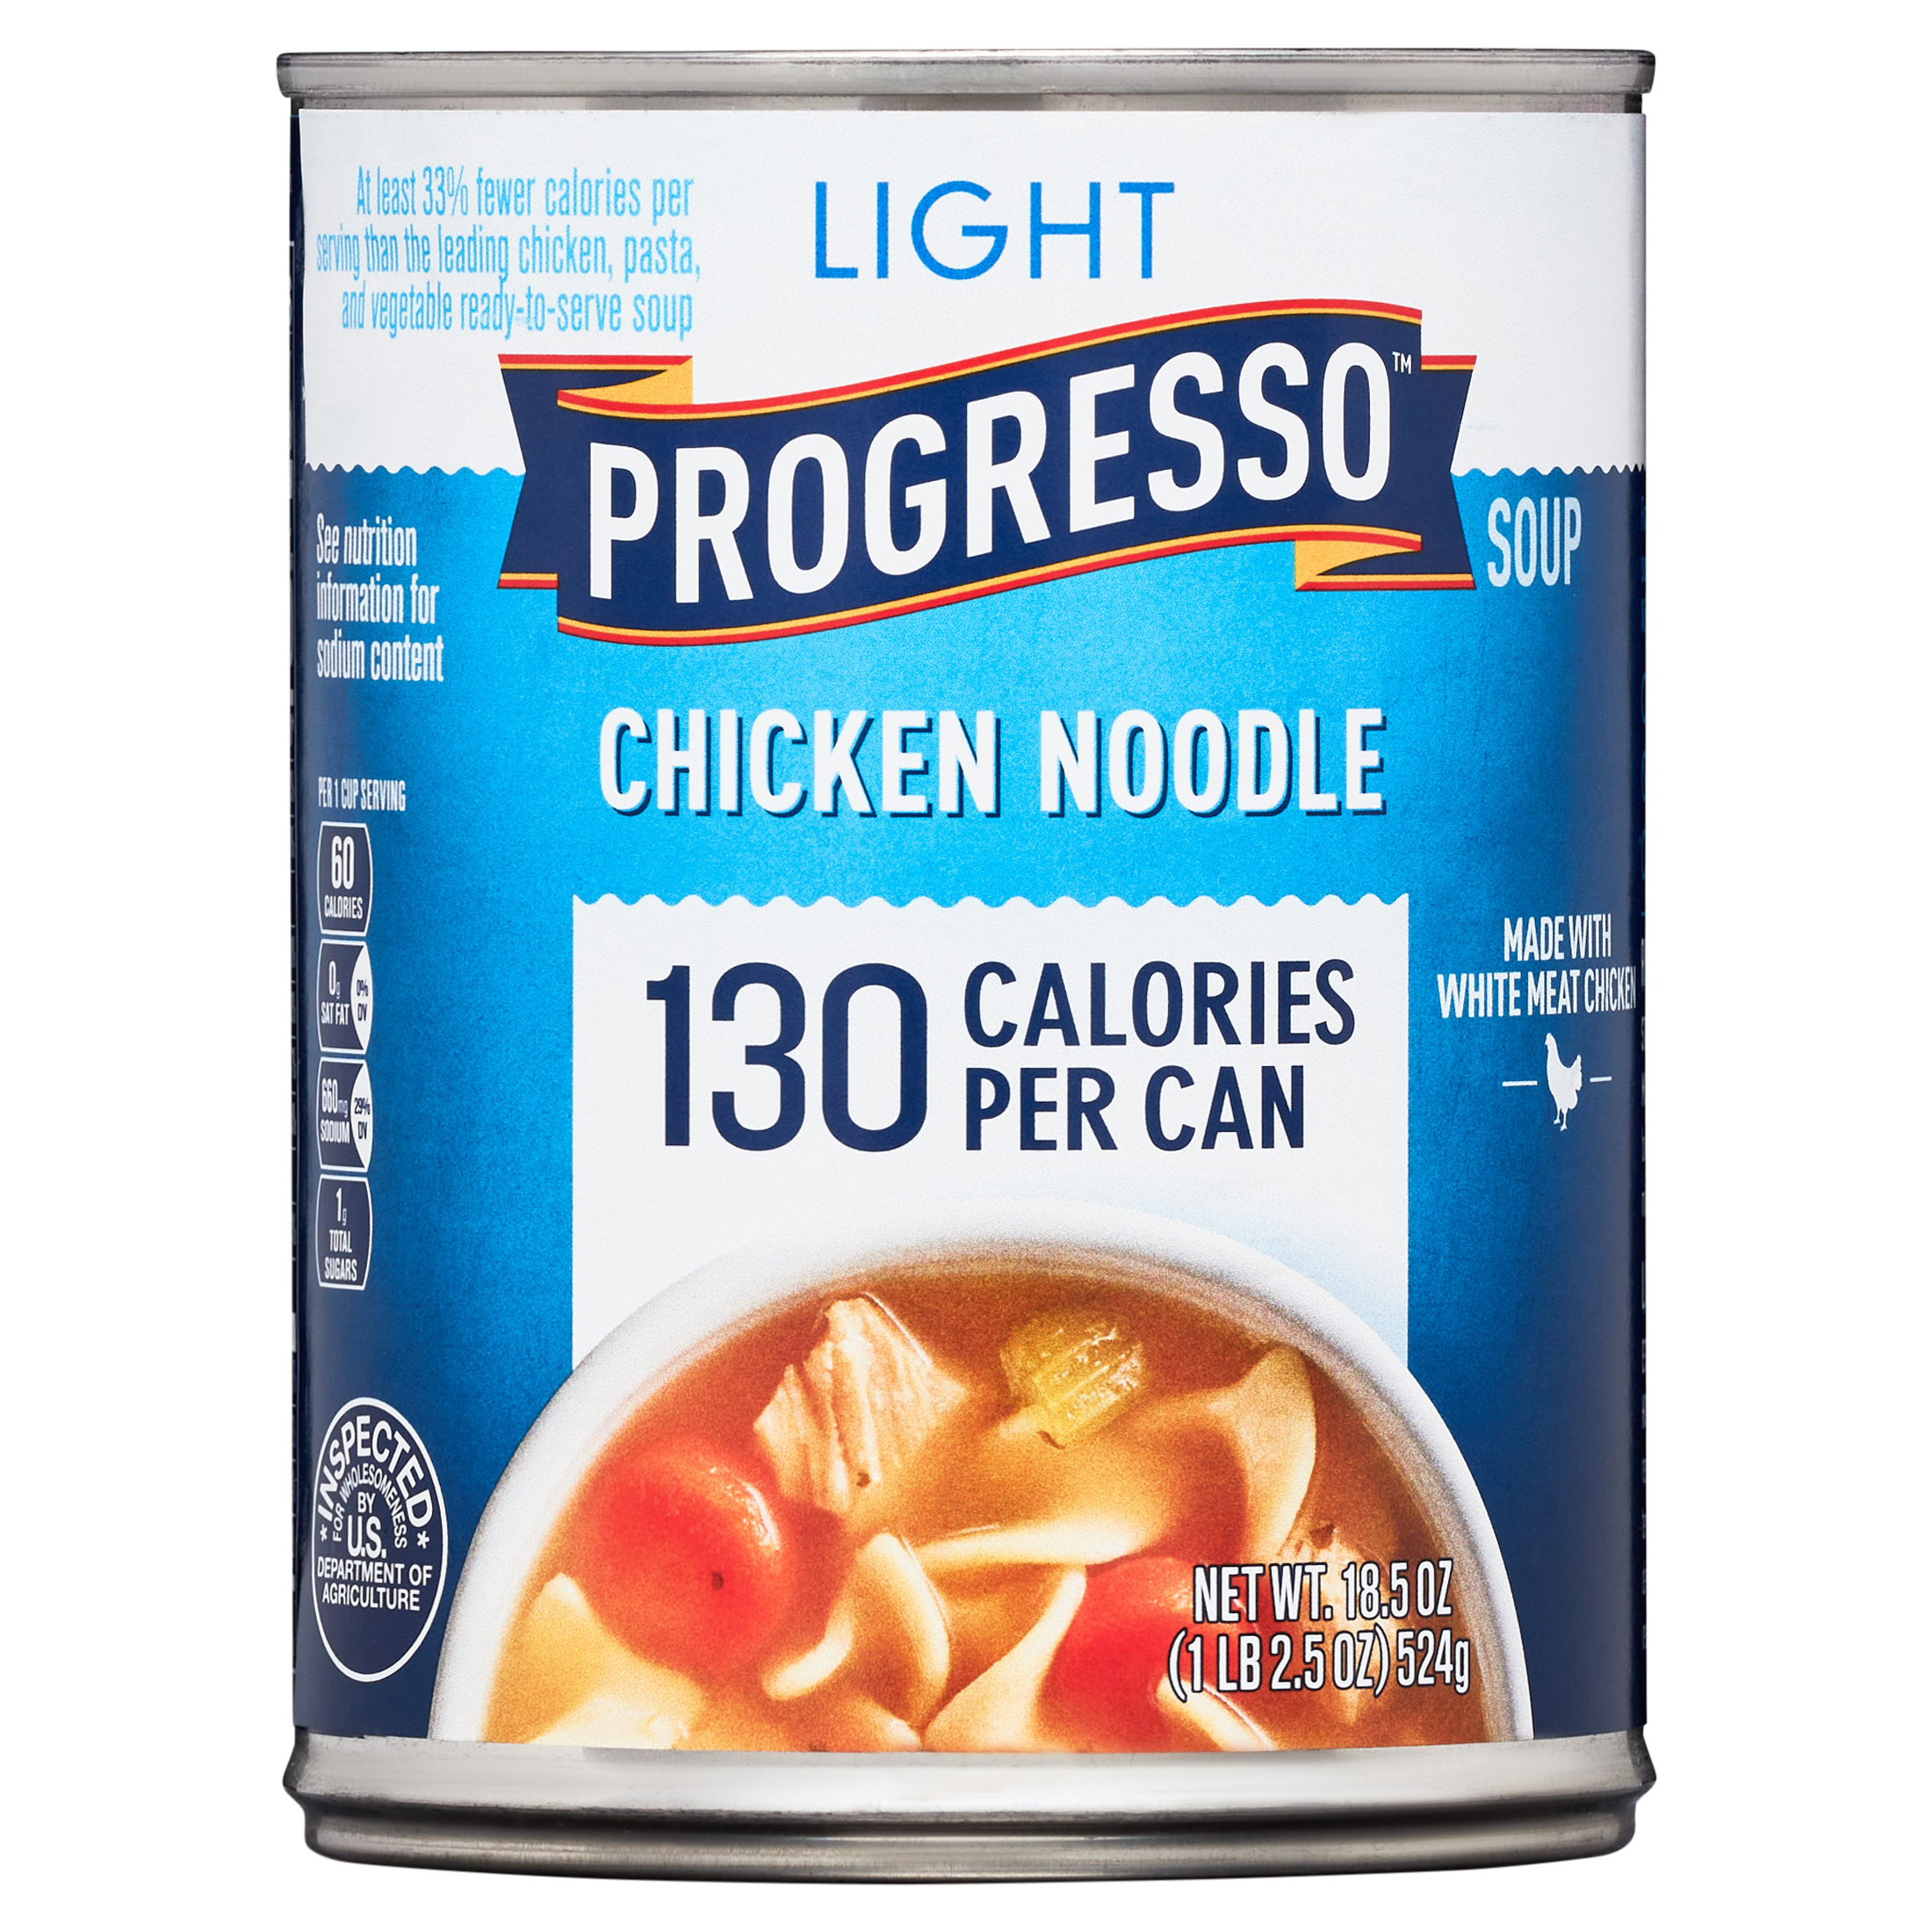 Progresso Light Chicken Noodle Soup, Ready To Serve Canned Soup, 18.5 oz. - image 1 of 11